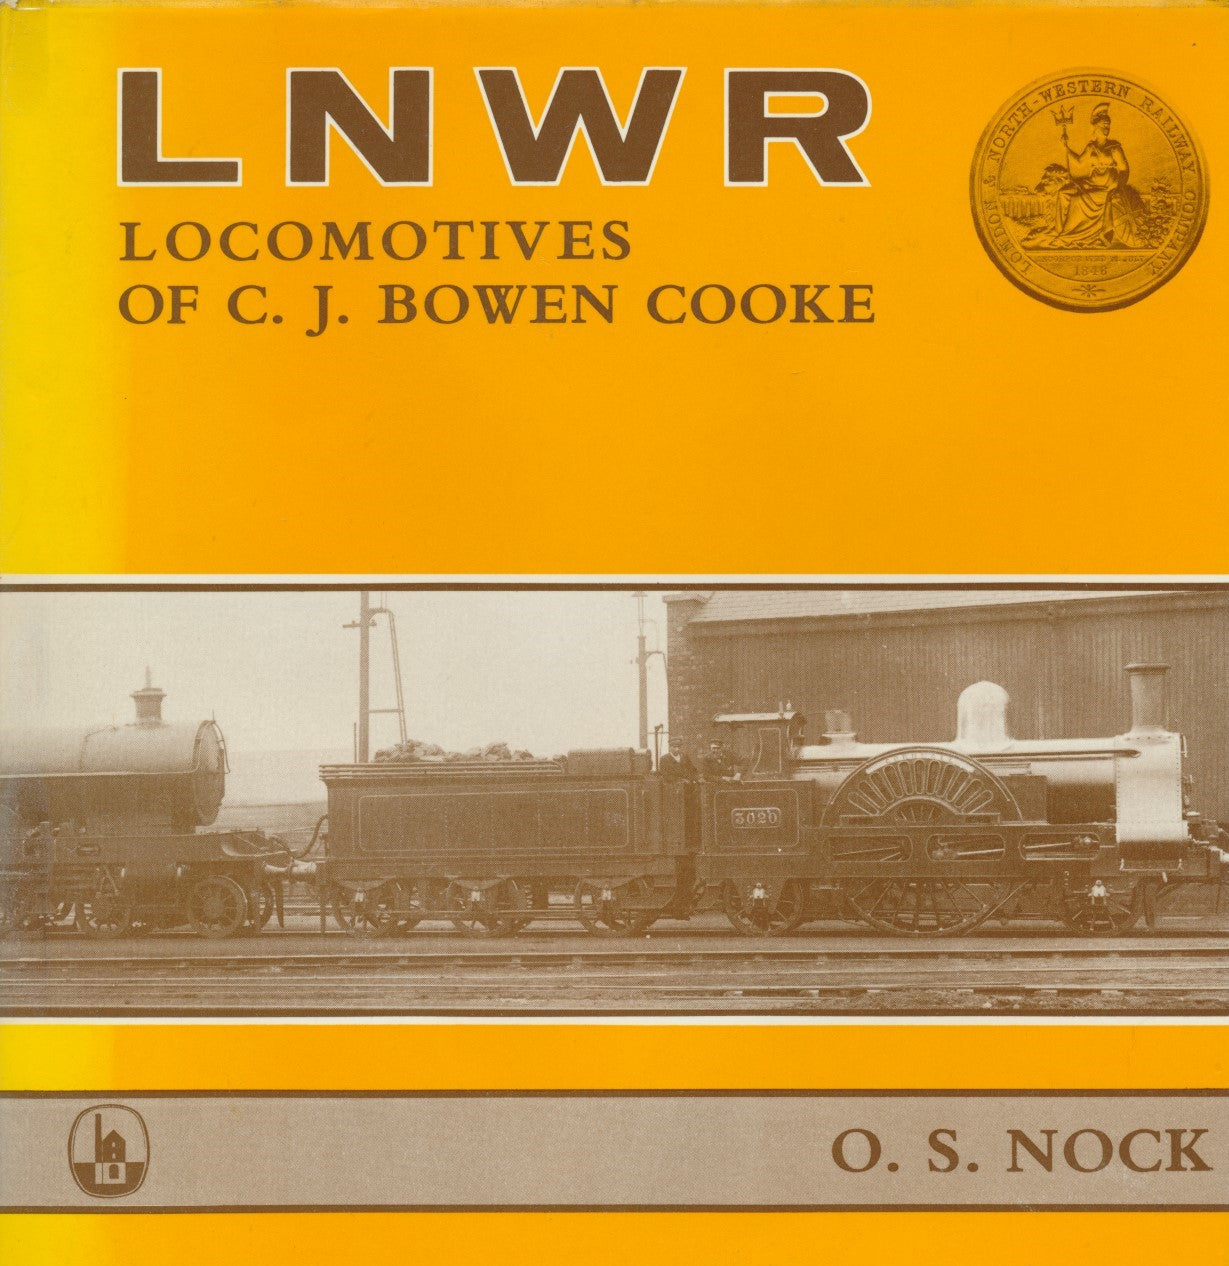 LNWR Locomotives of C. J. Bowen Cooke